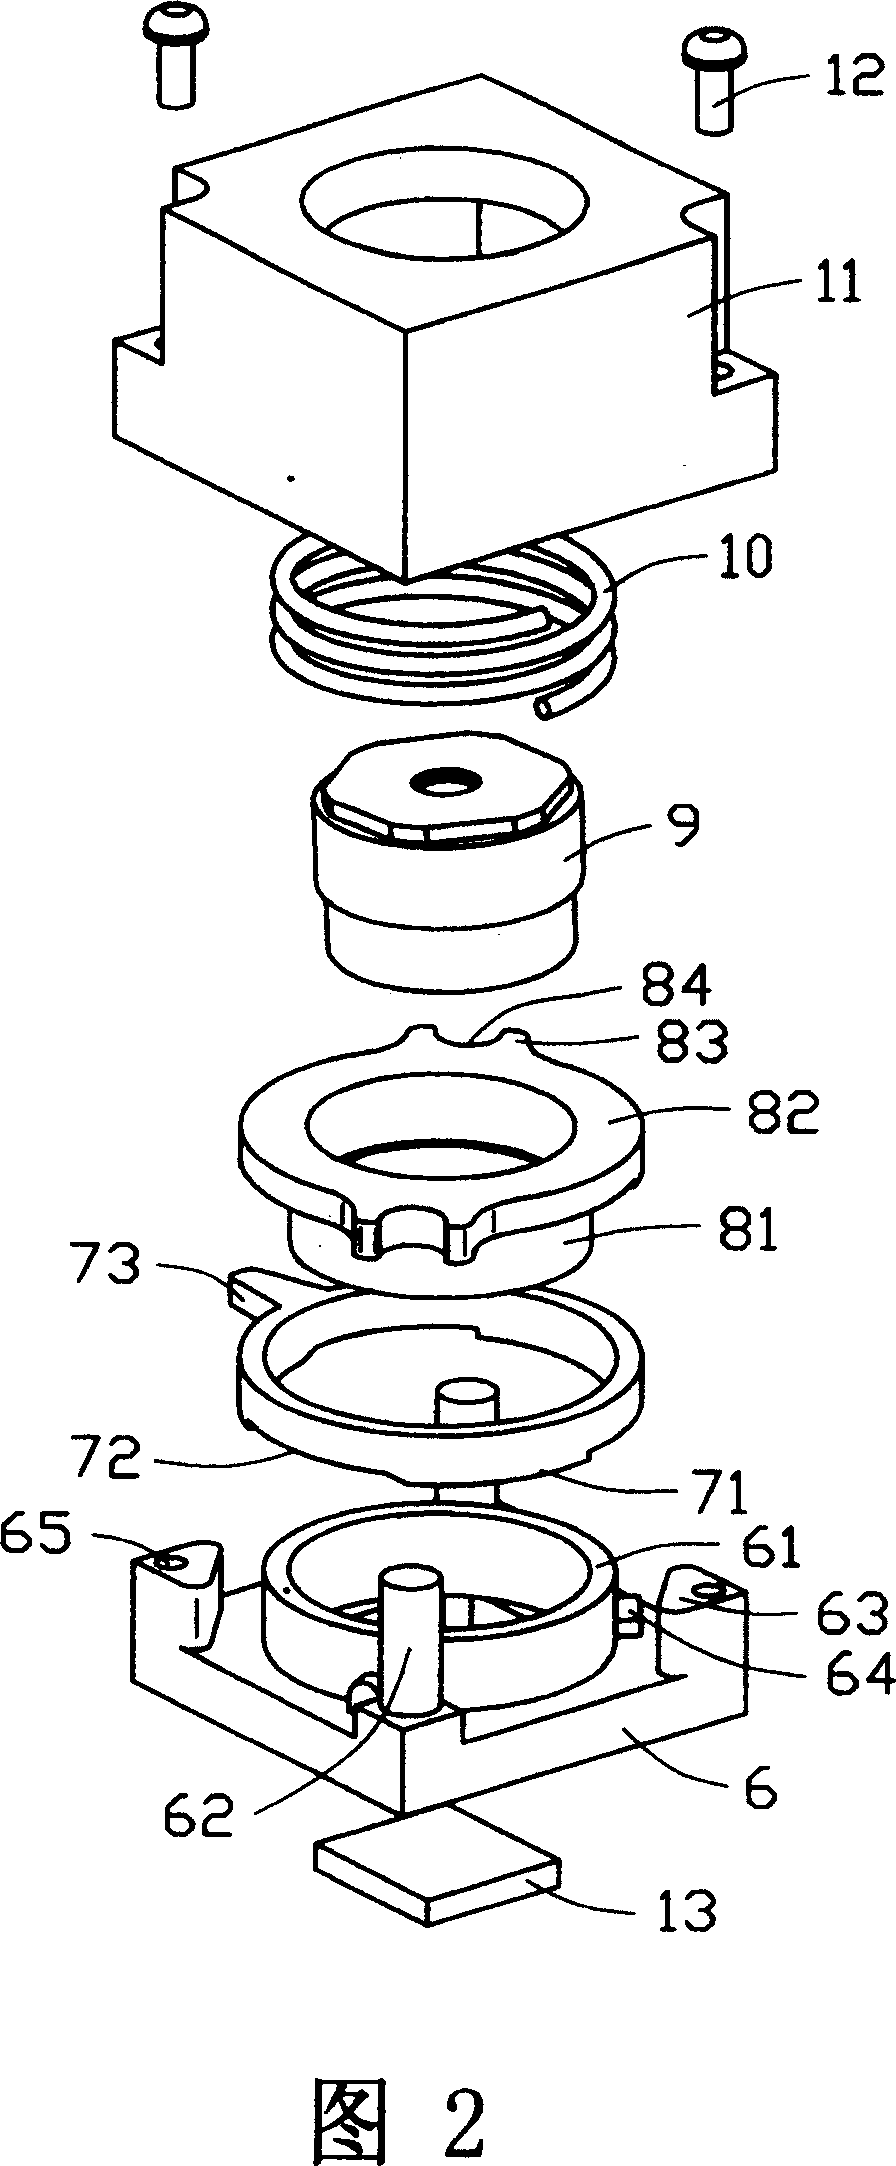 Camera lens with regulating mechanism